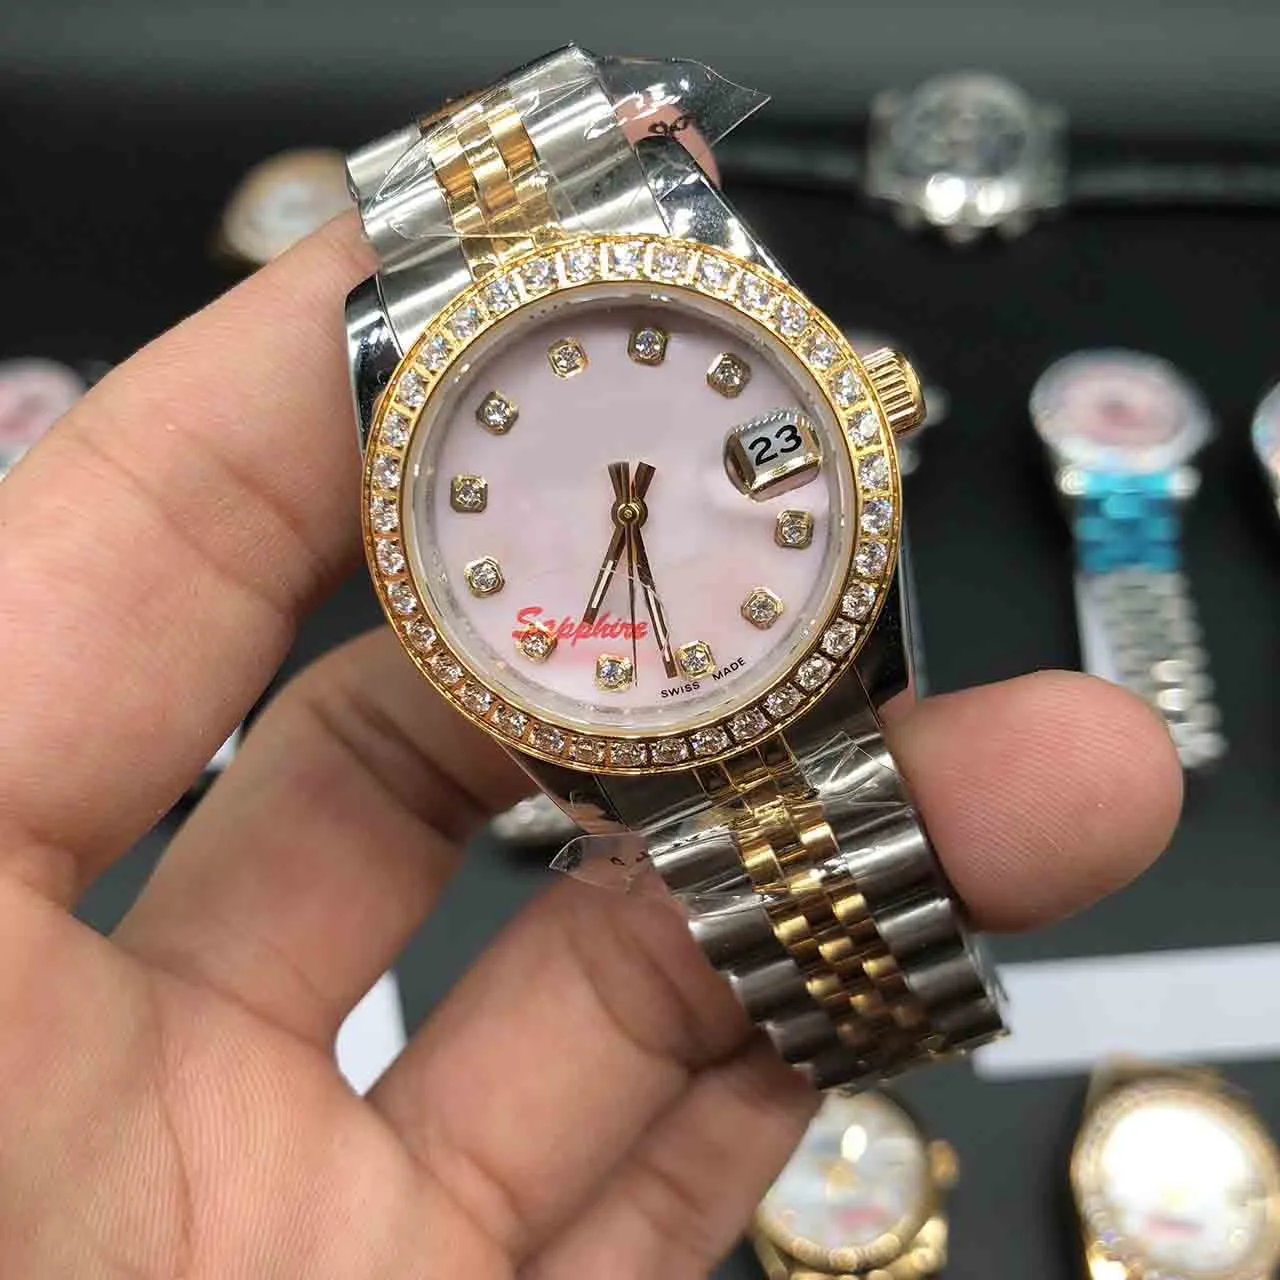 DateJust 시계 다이아몬드 마크 핑크 쉘 다이얼 여성 스테인리스 시계 여성 자동 손목 시계 발렌타인 선물 32mm211c